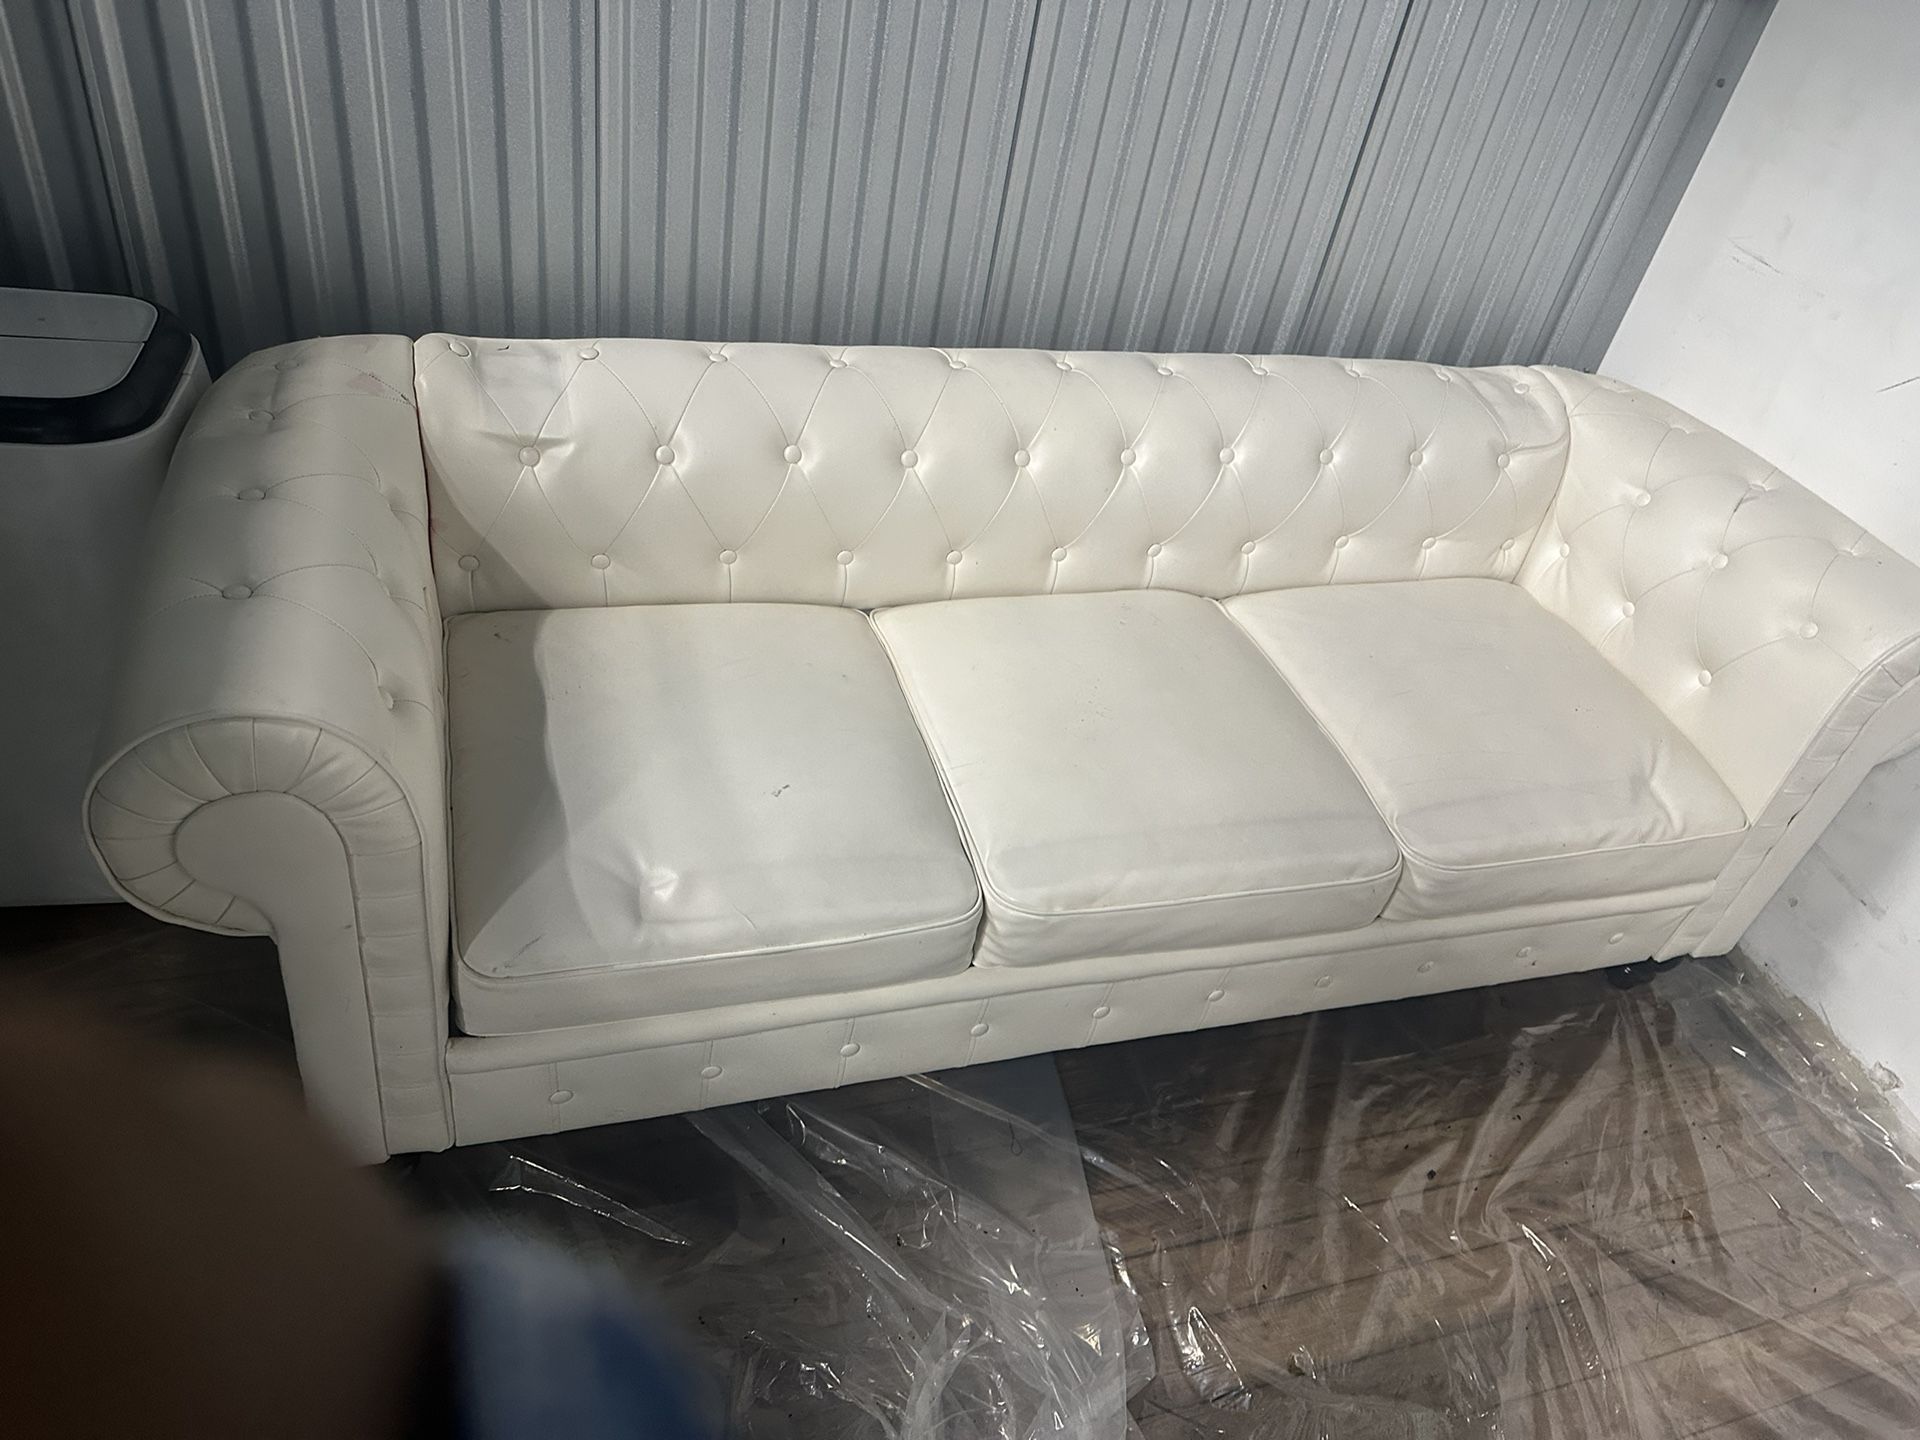 White Sofa From Wayfair 